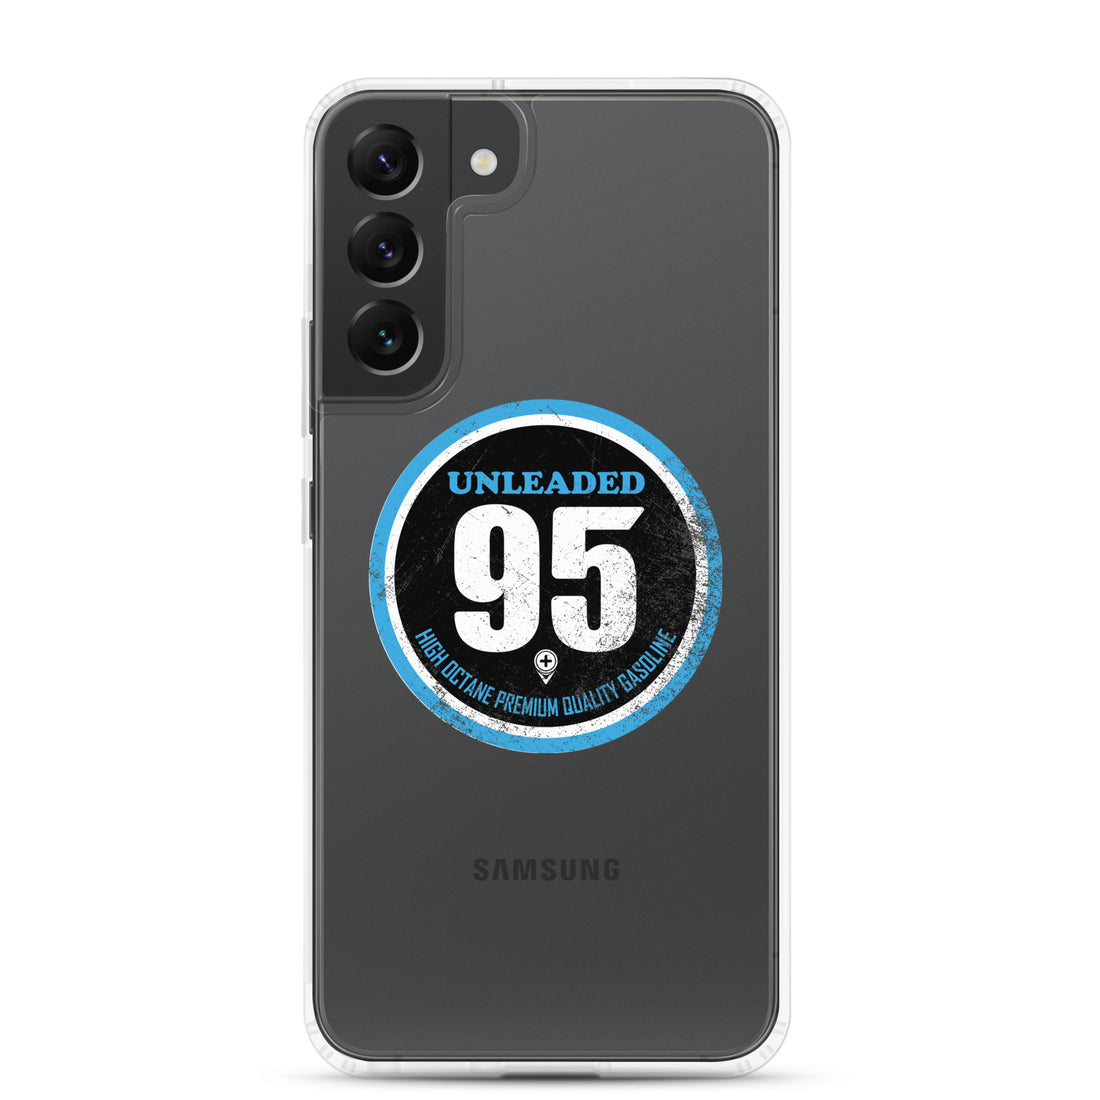 UNLEADED 95 Samsung Case